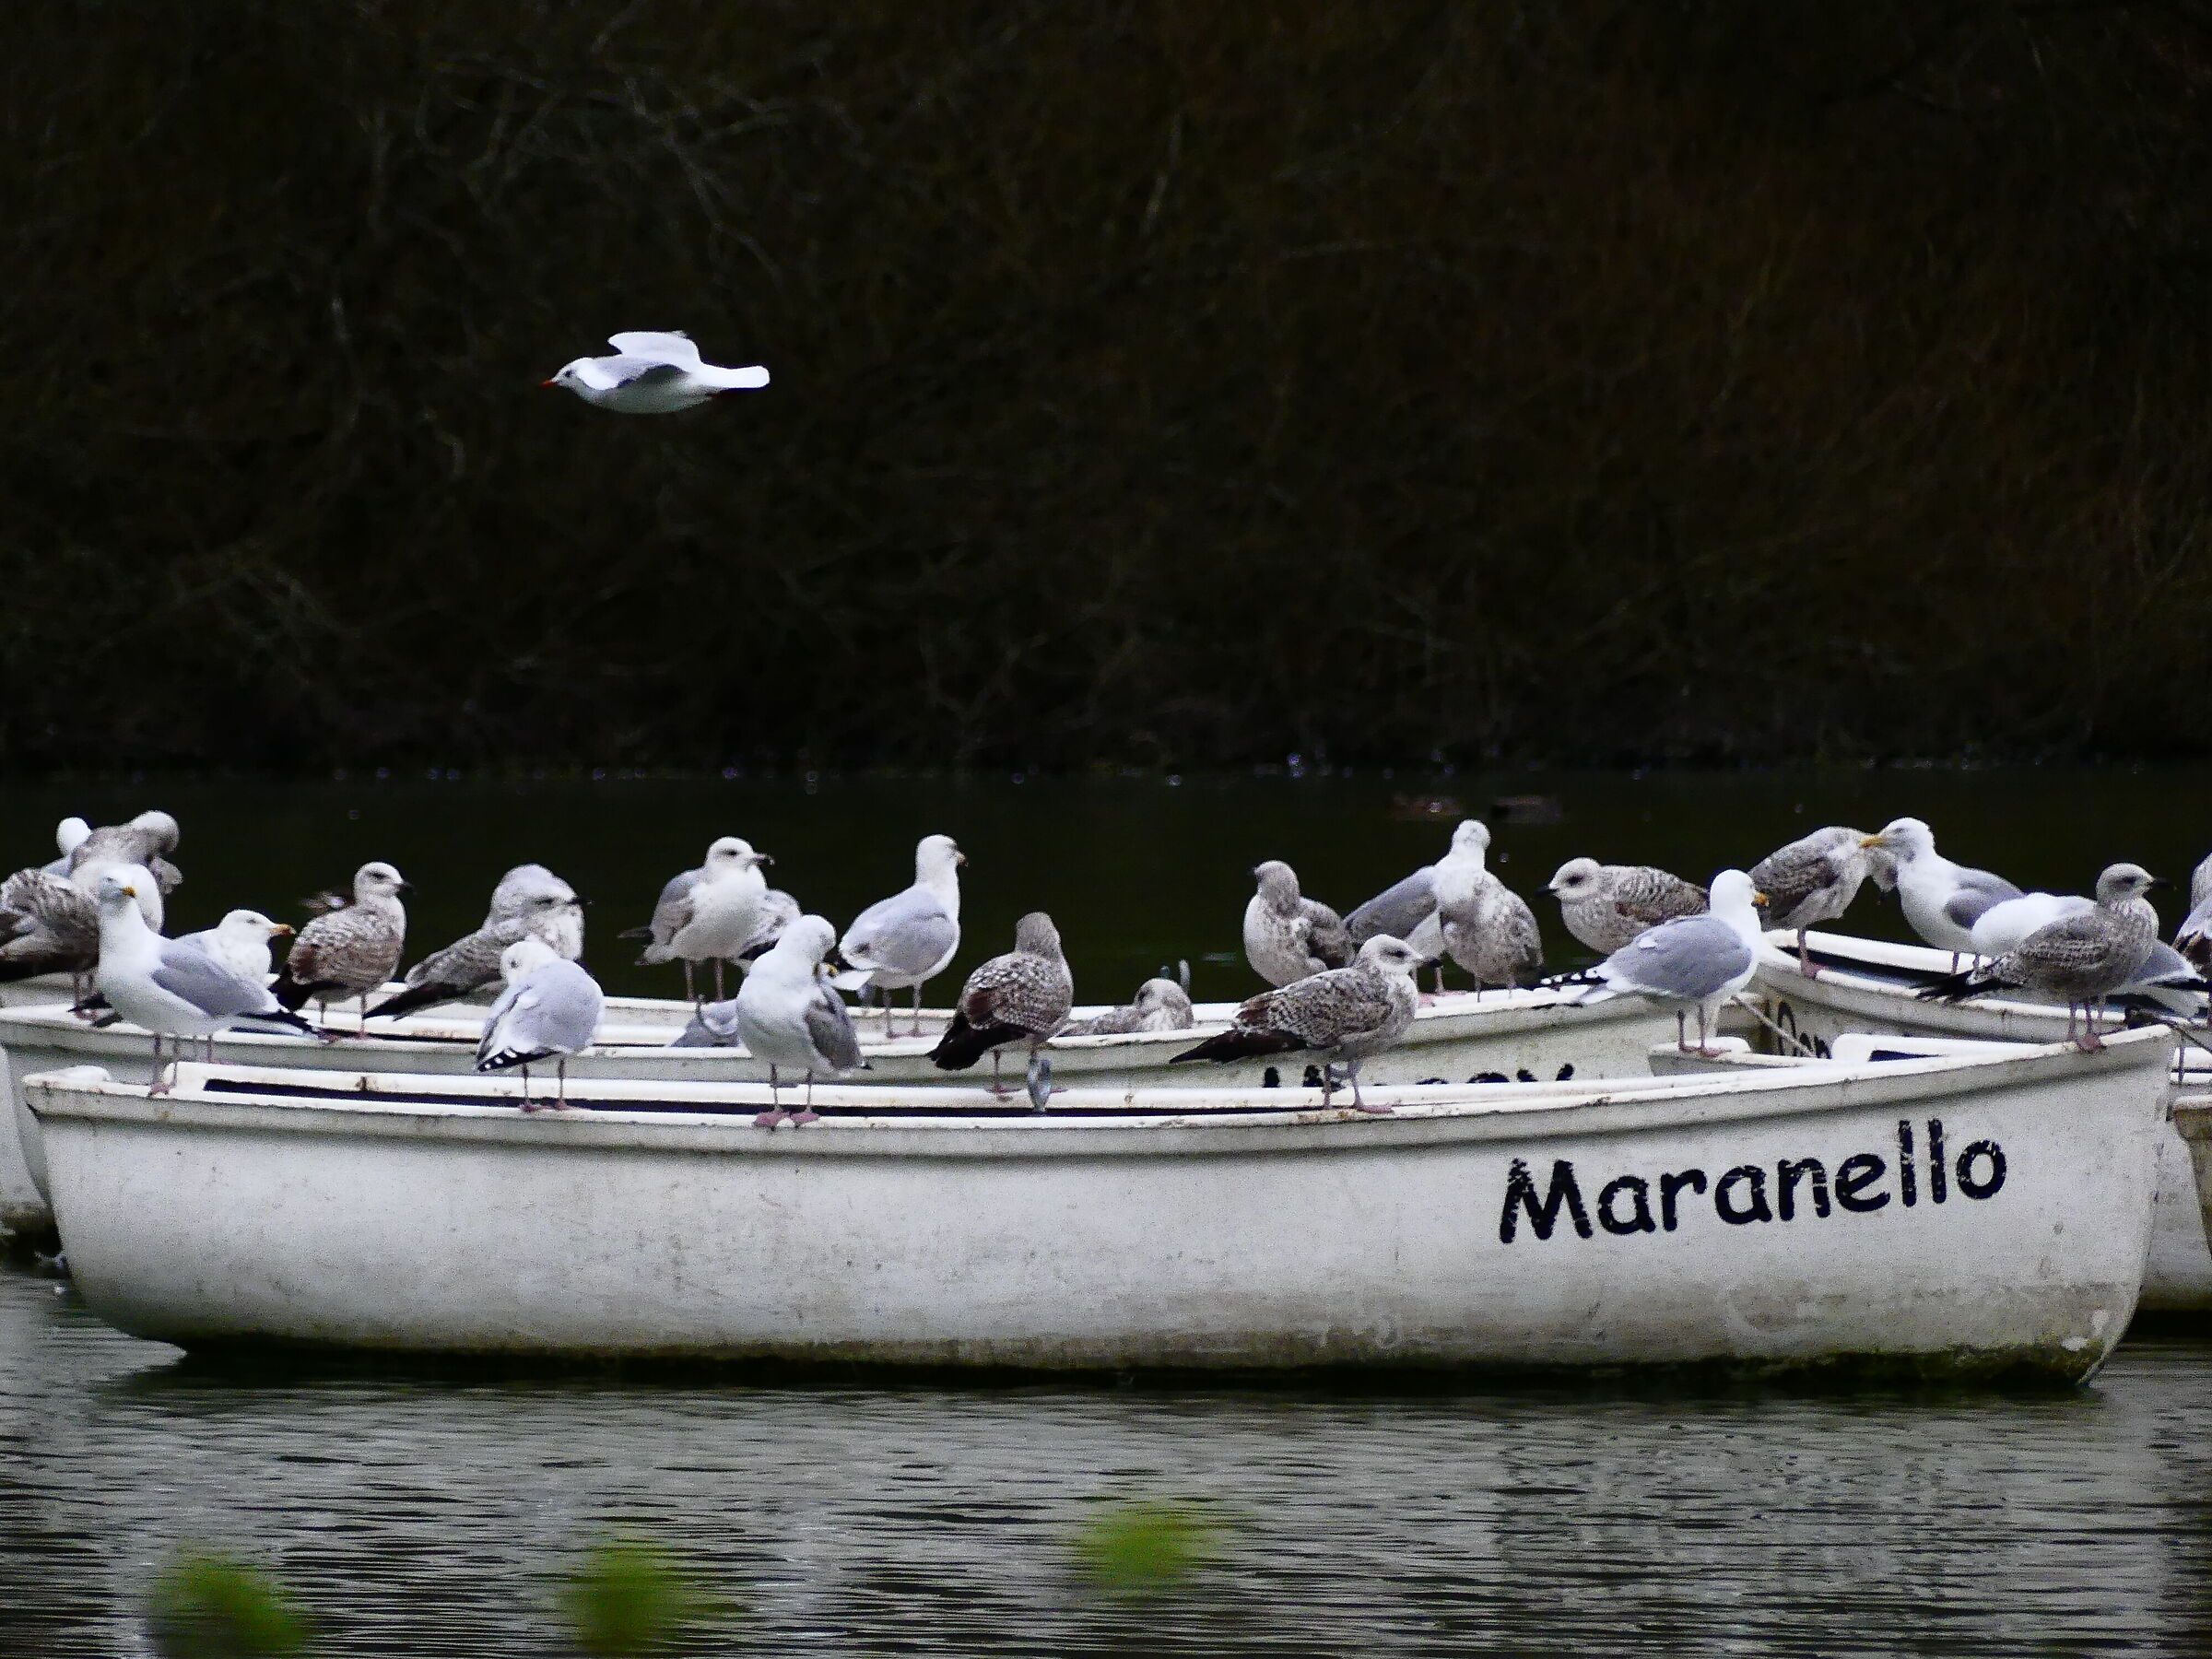 All by boat in Maranello...